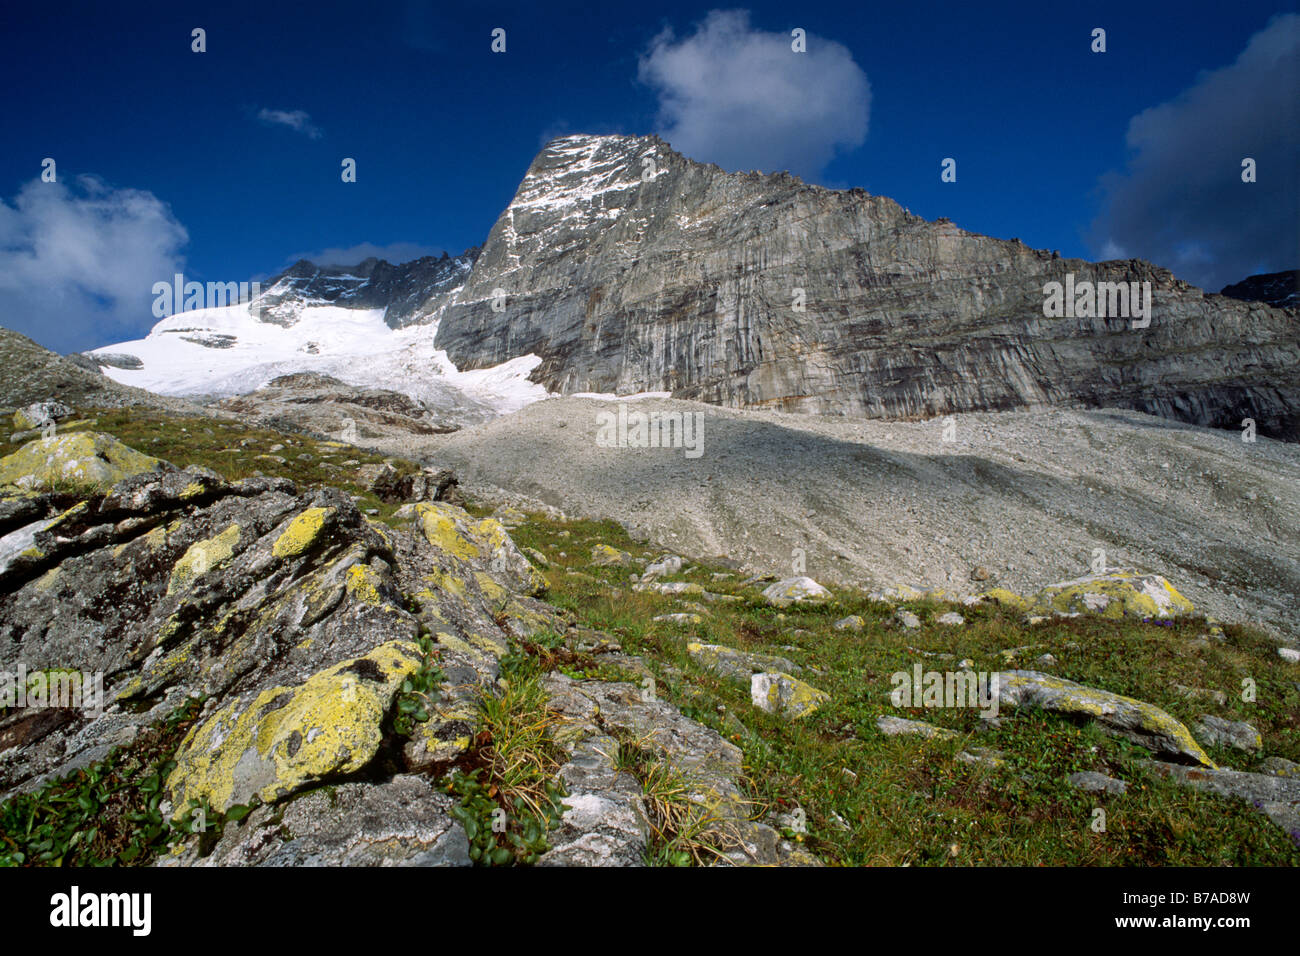 Fussstein north rim and Olperer glacier, Zillertal Alps, North Tirol, Austria, Europe Stock Photo